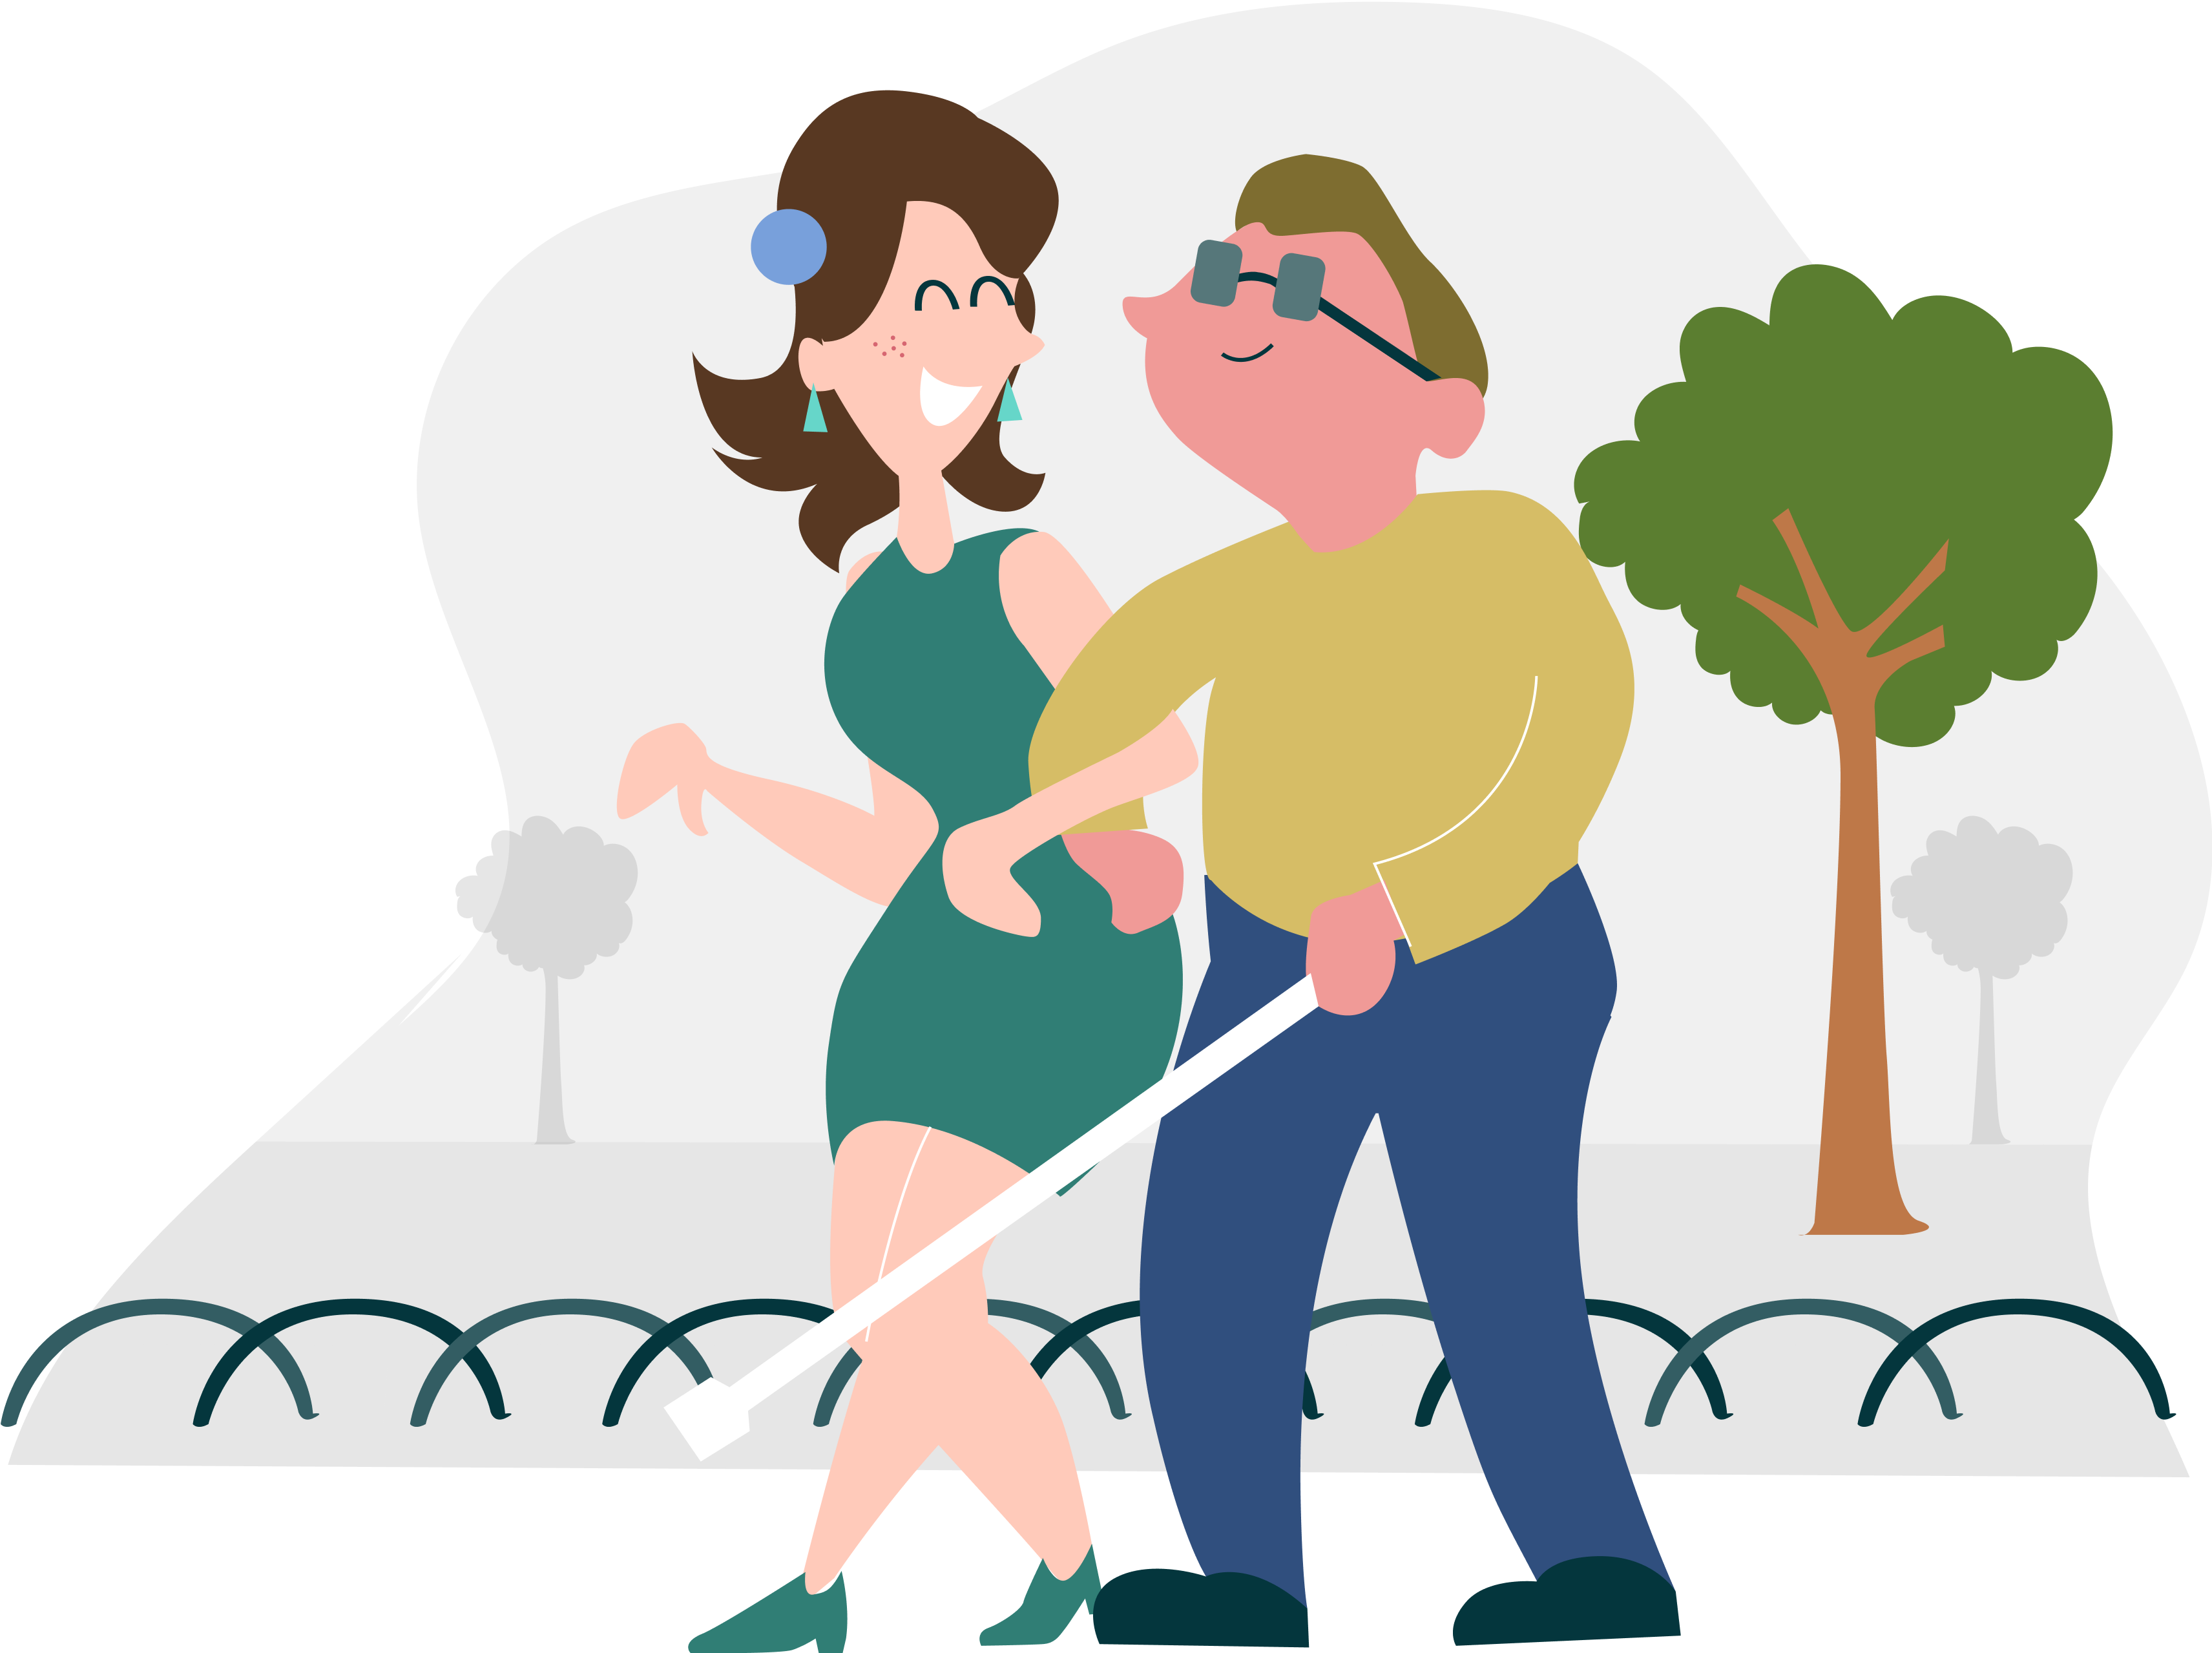 helpper illustratie van helpper die arm in arm loopt met blinde man in een park